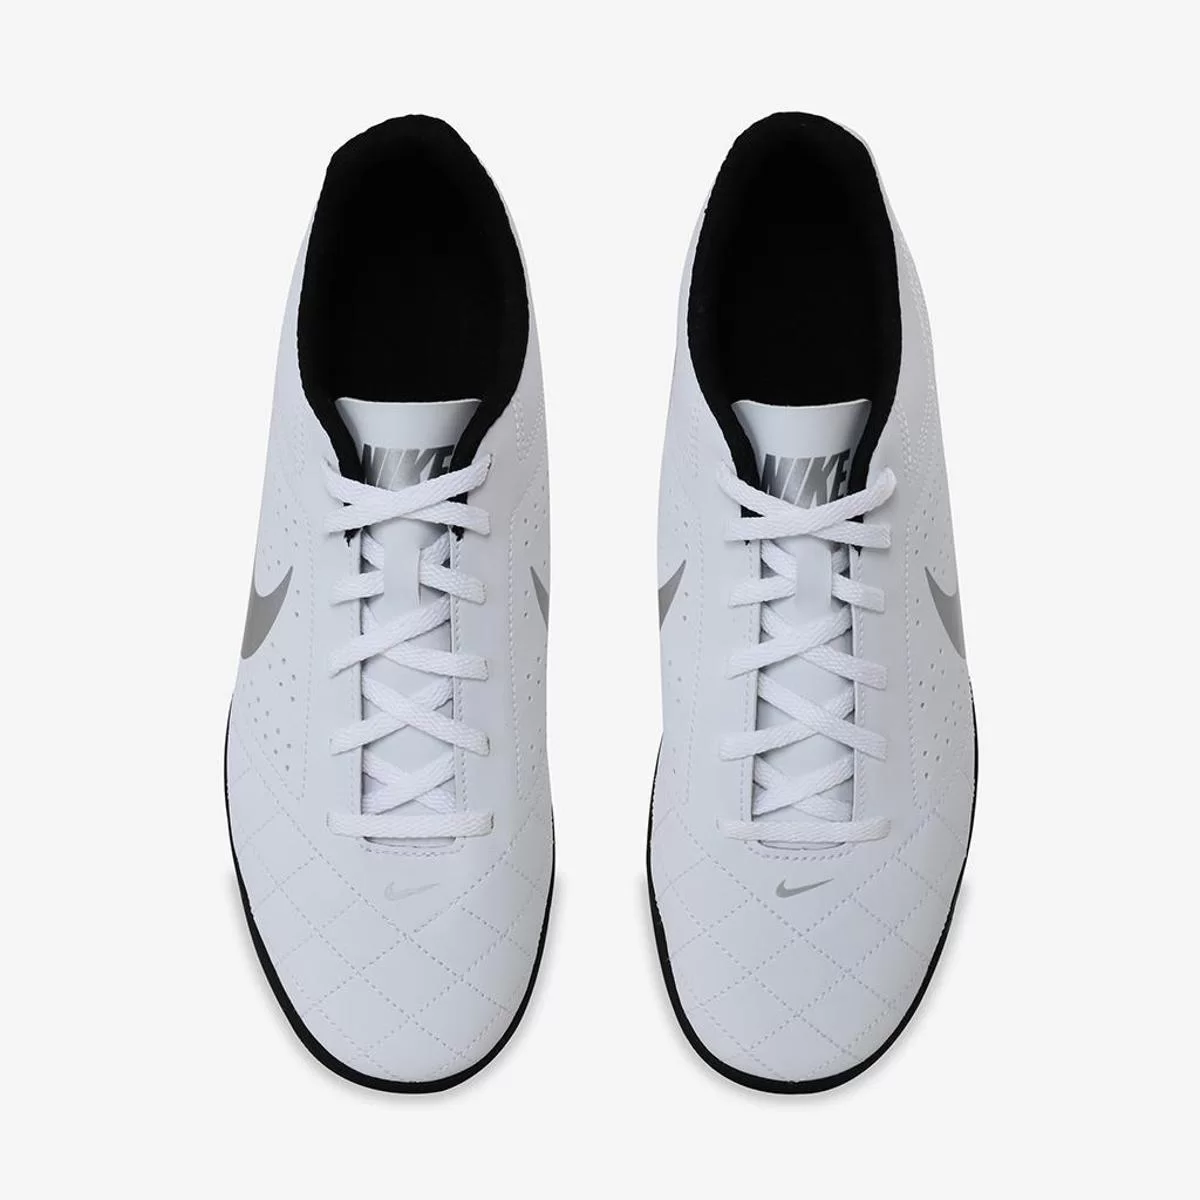 Chuteira Nike Beco 2 TF – Branca